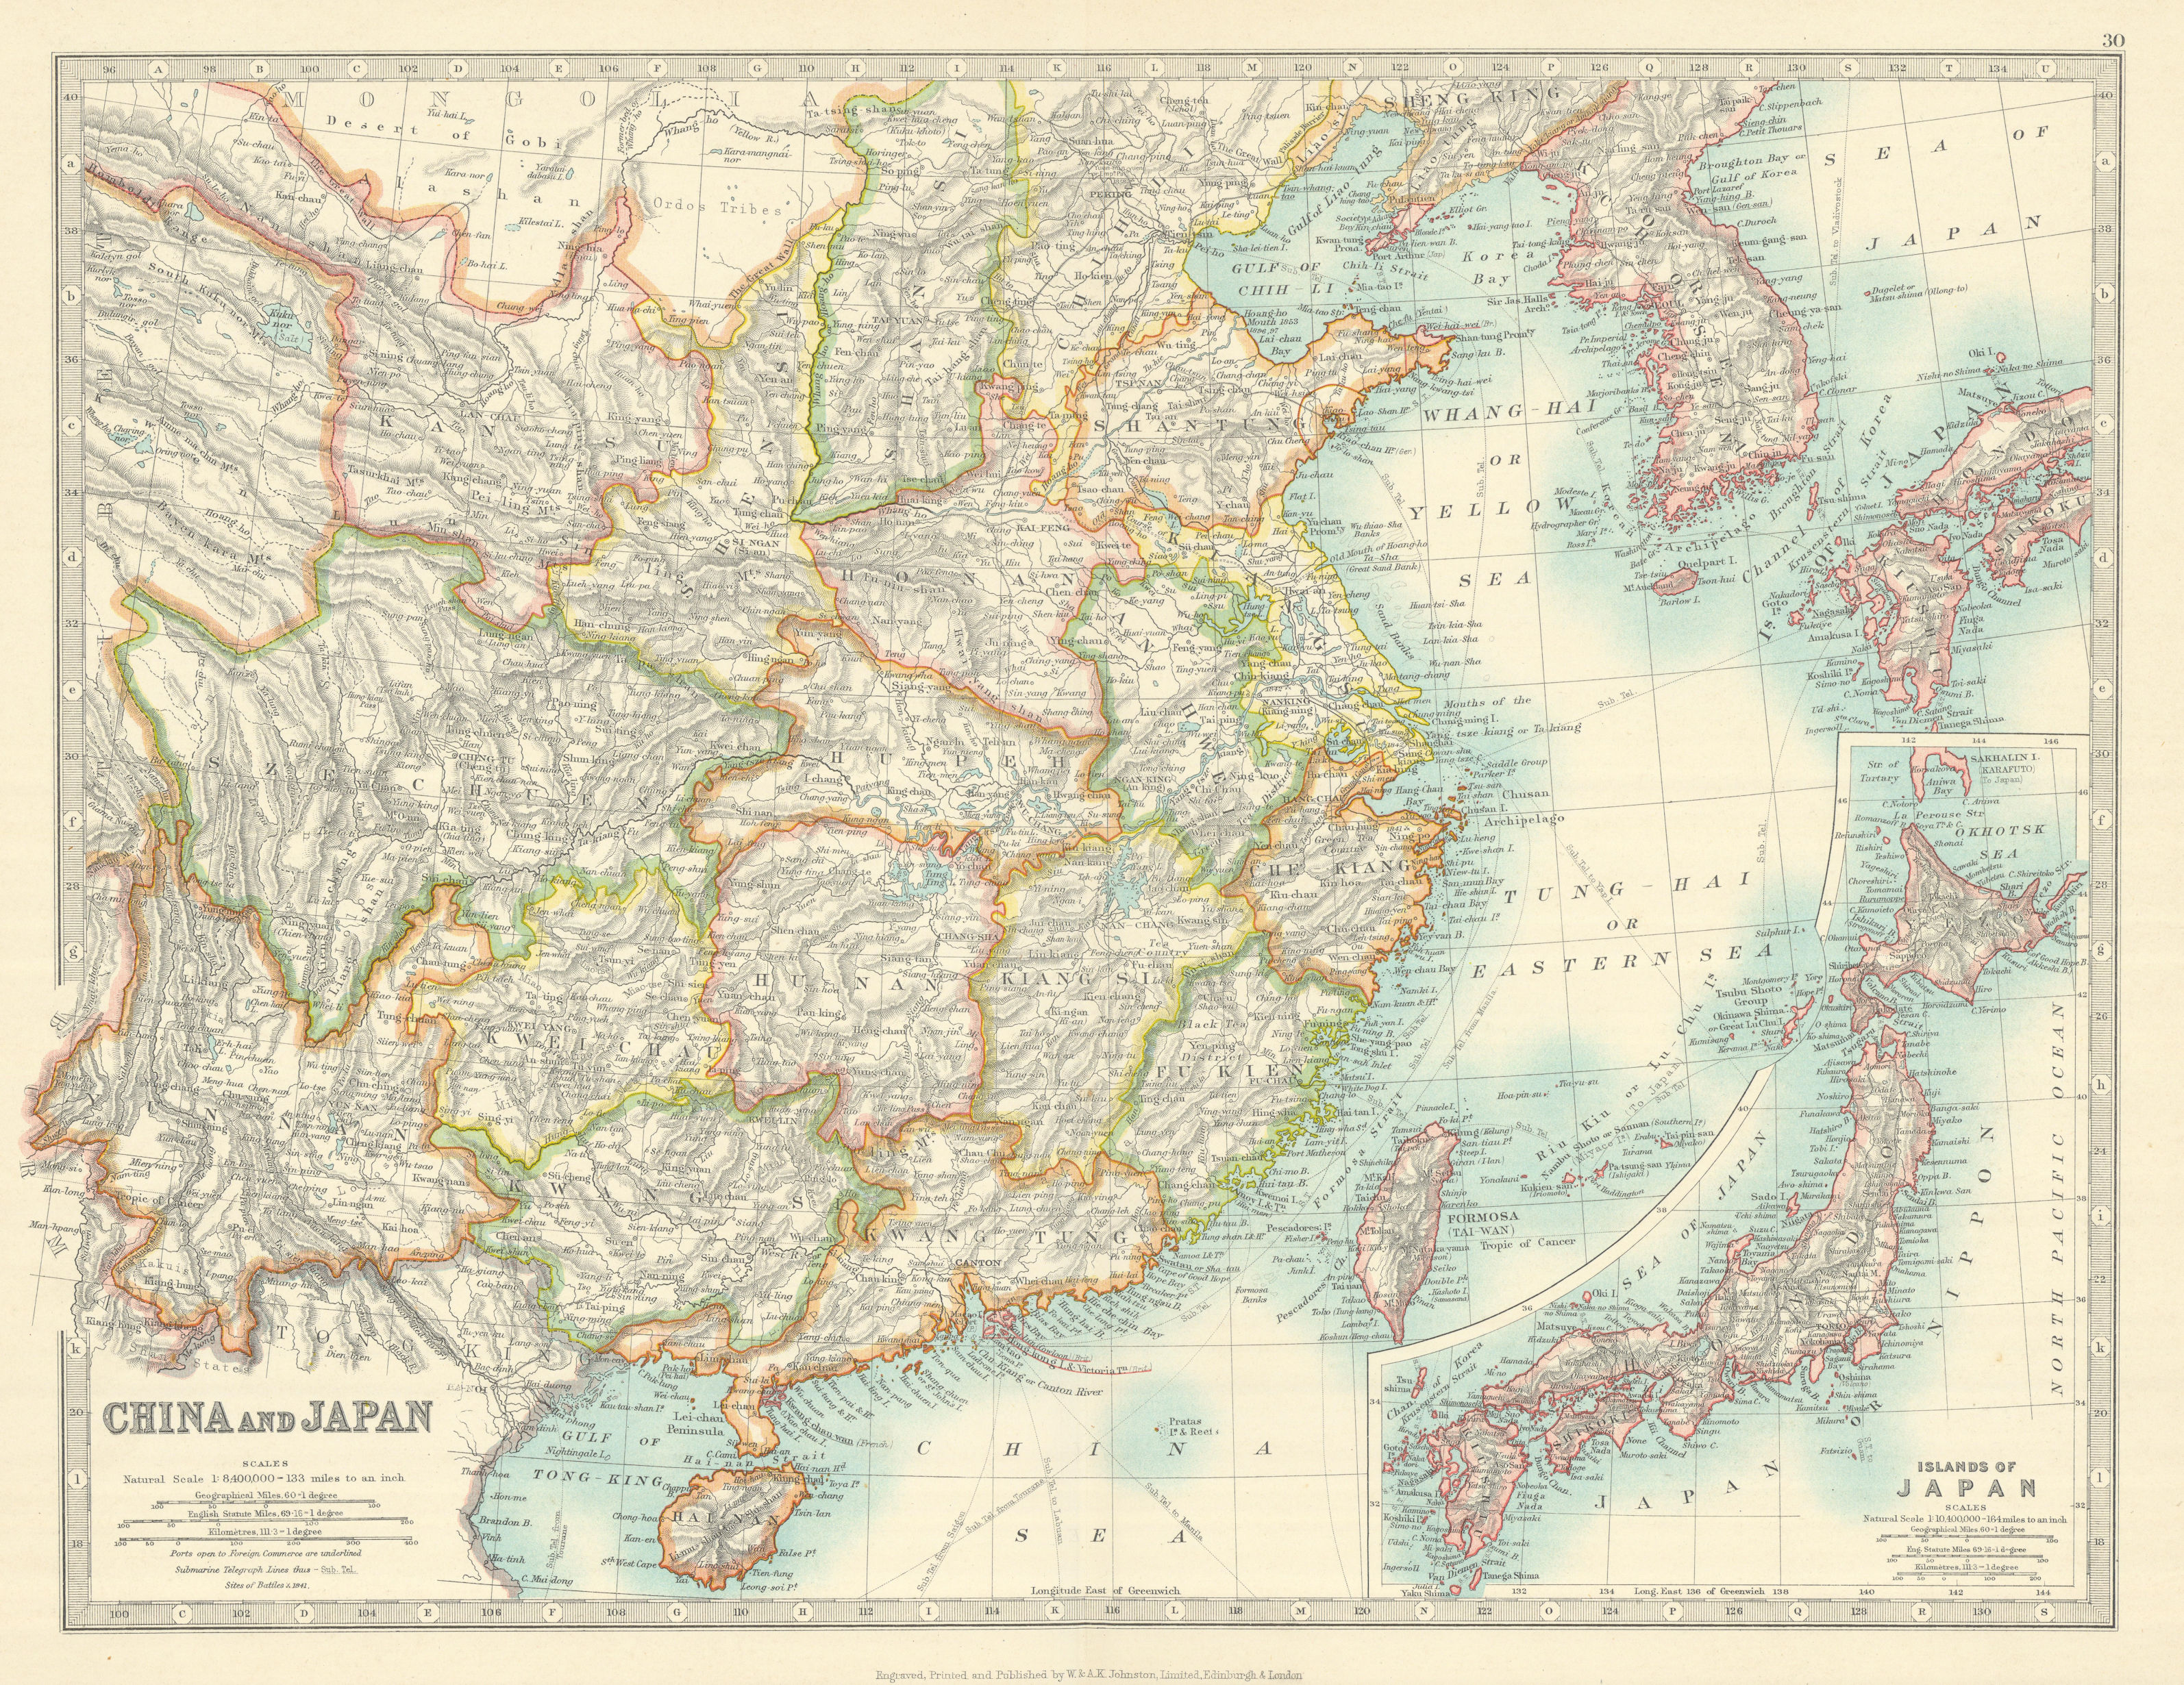 CHINA & JAPAN showing Opium Wars battlefields & dates. JOHNSTON 1913 old map